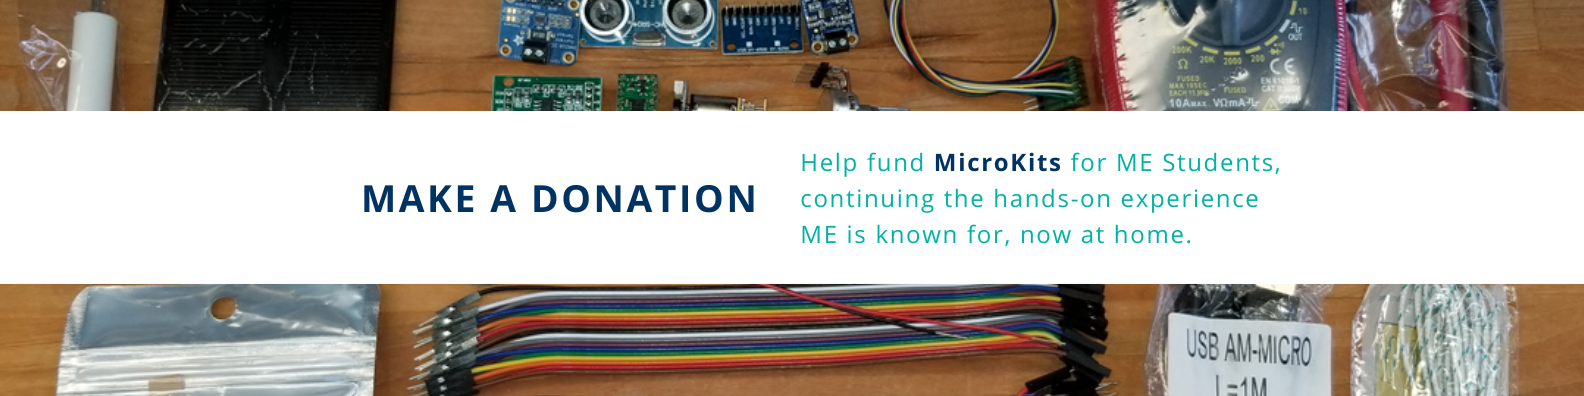 MicroKit Donation Banner